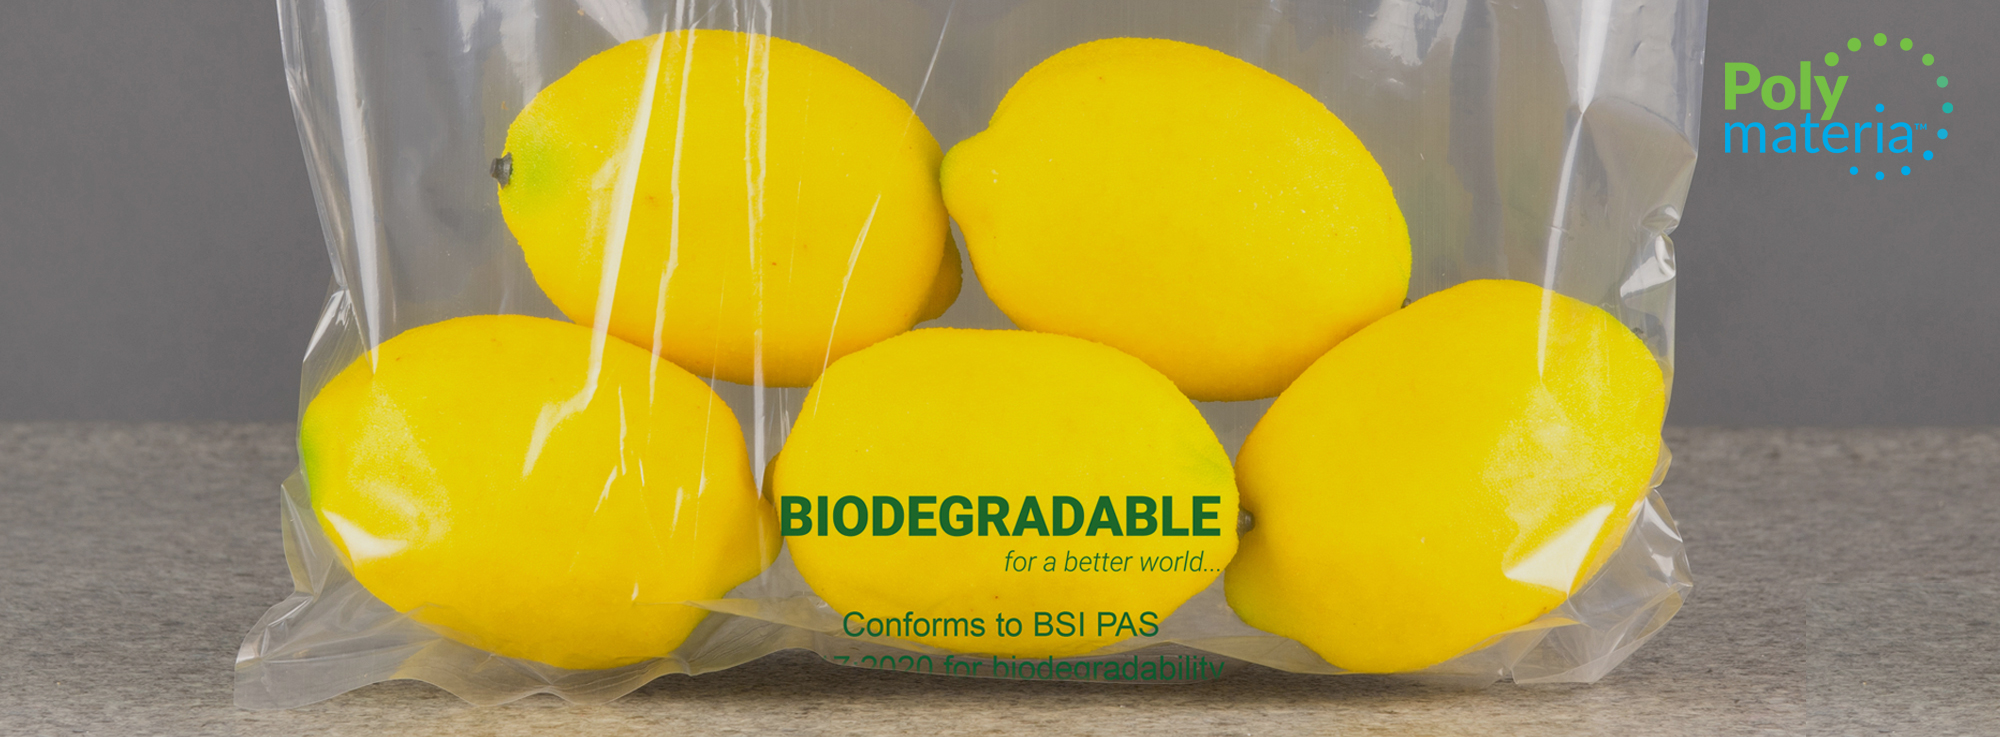 Biodegradable packing bag containing lemons